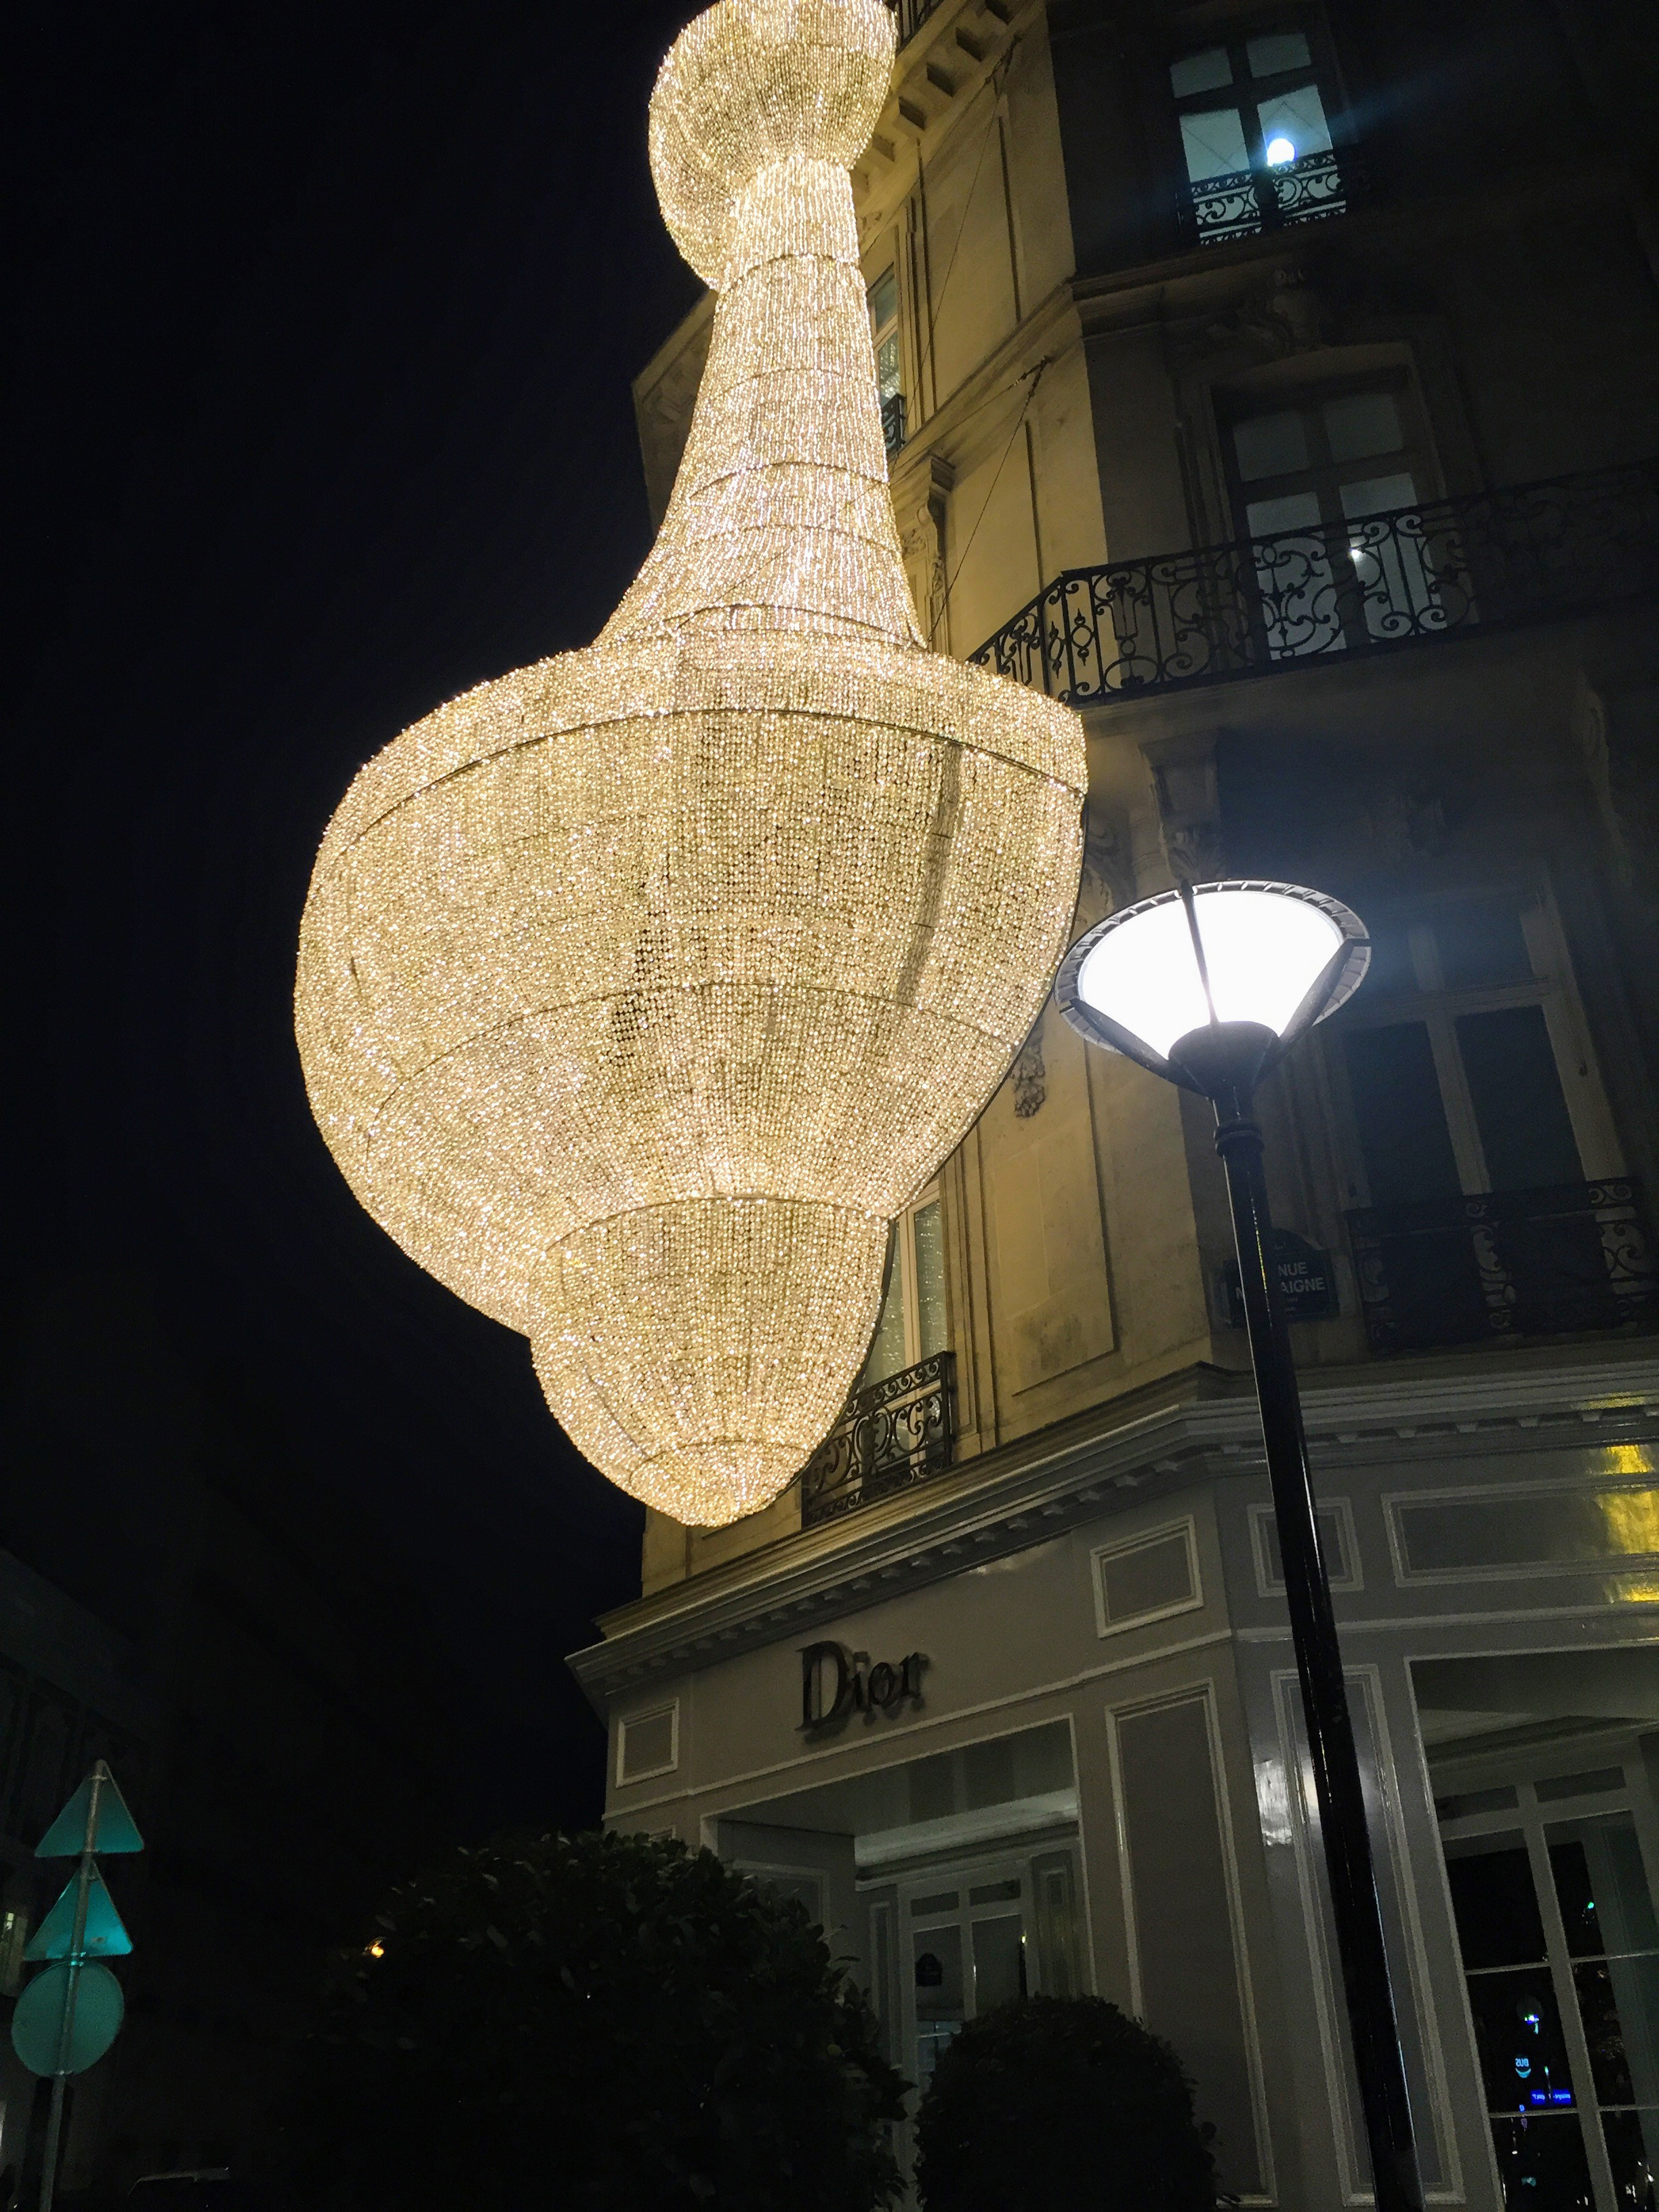 Avenue Montaigne Paris Fashion Windows - Dior